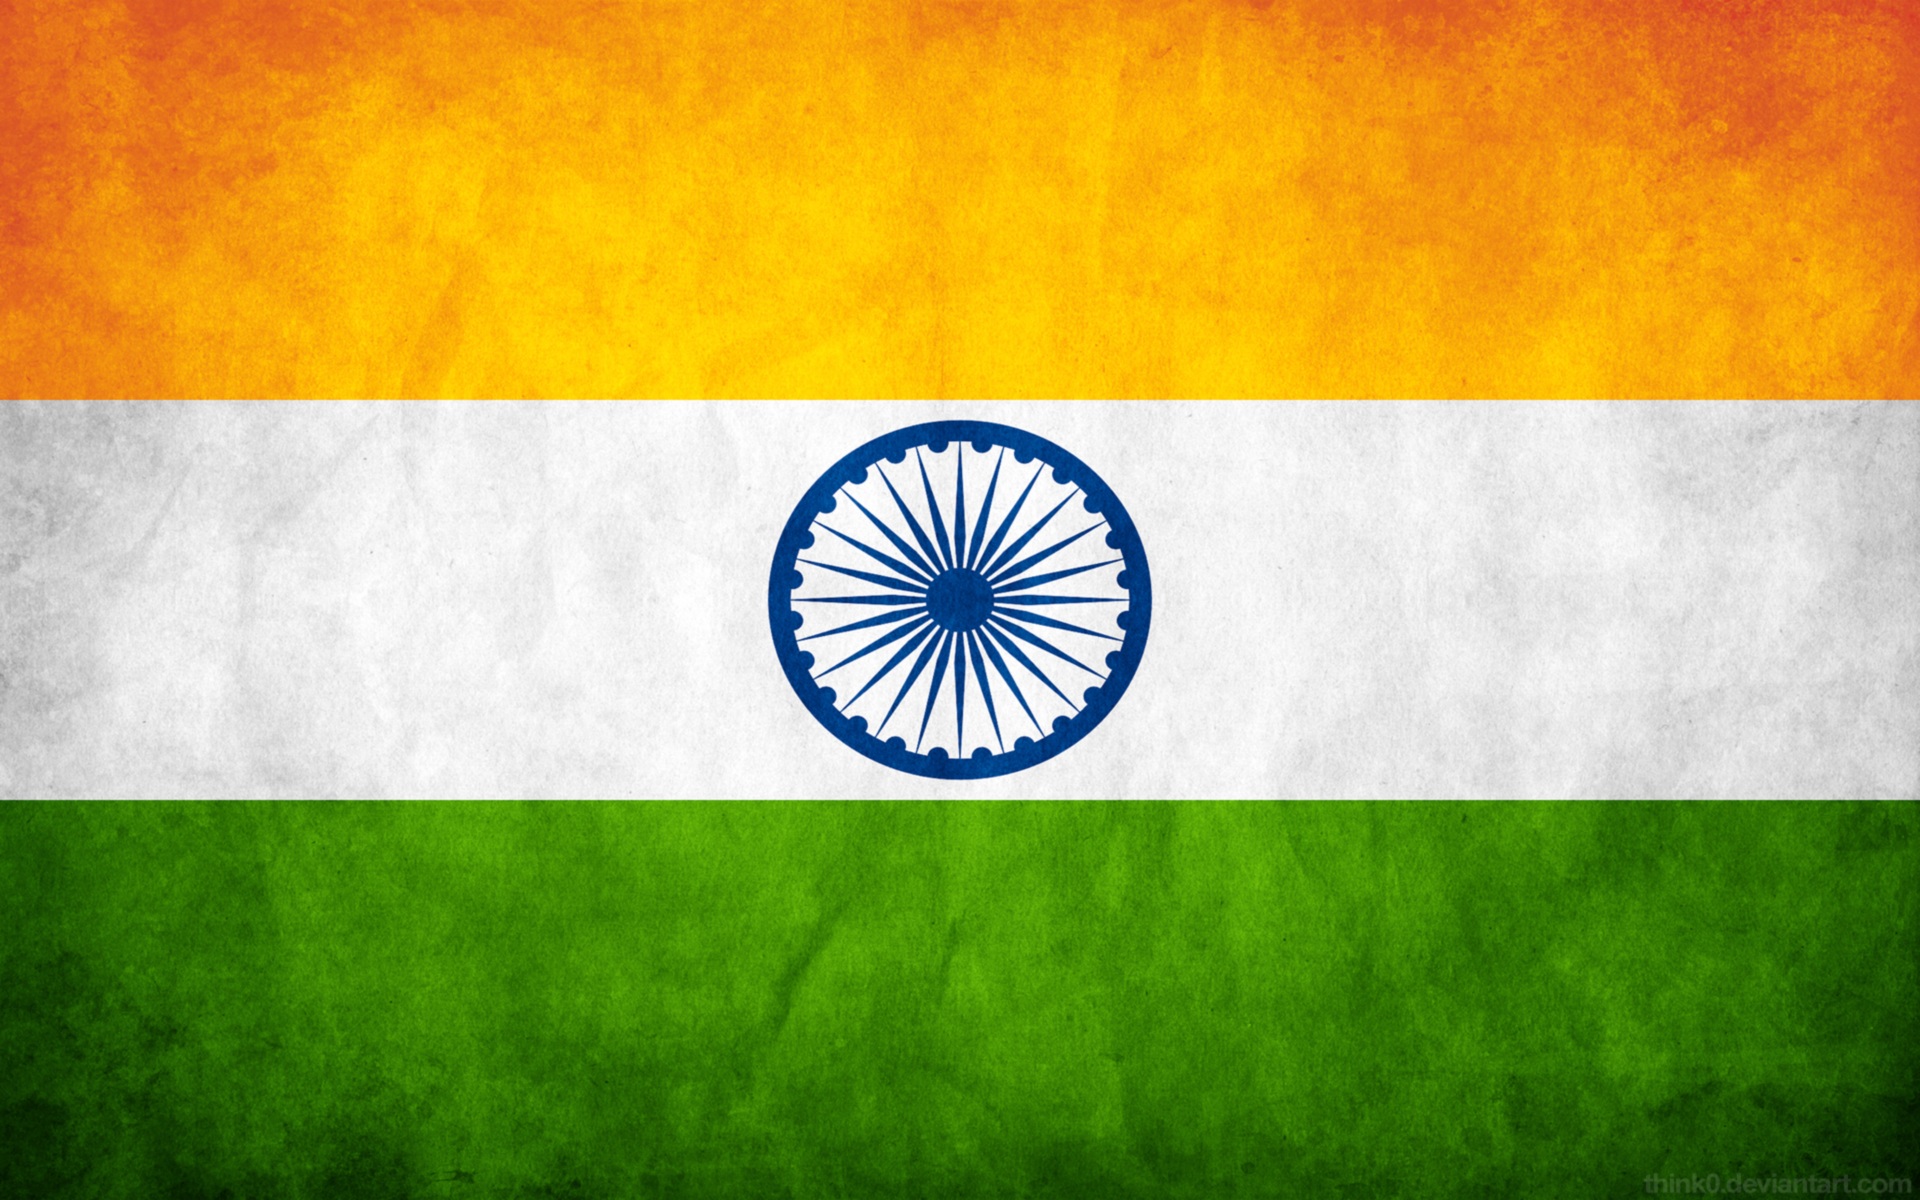 Indian Flag Image free download